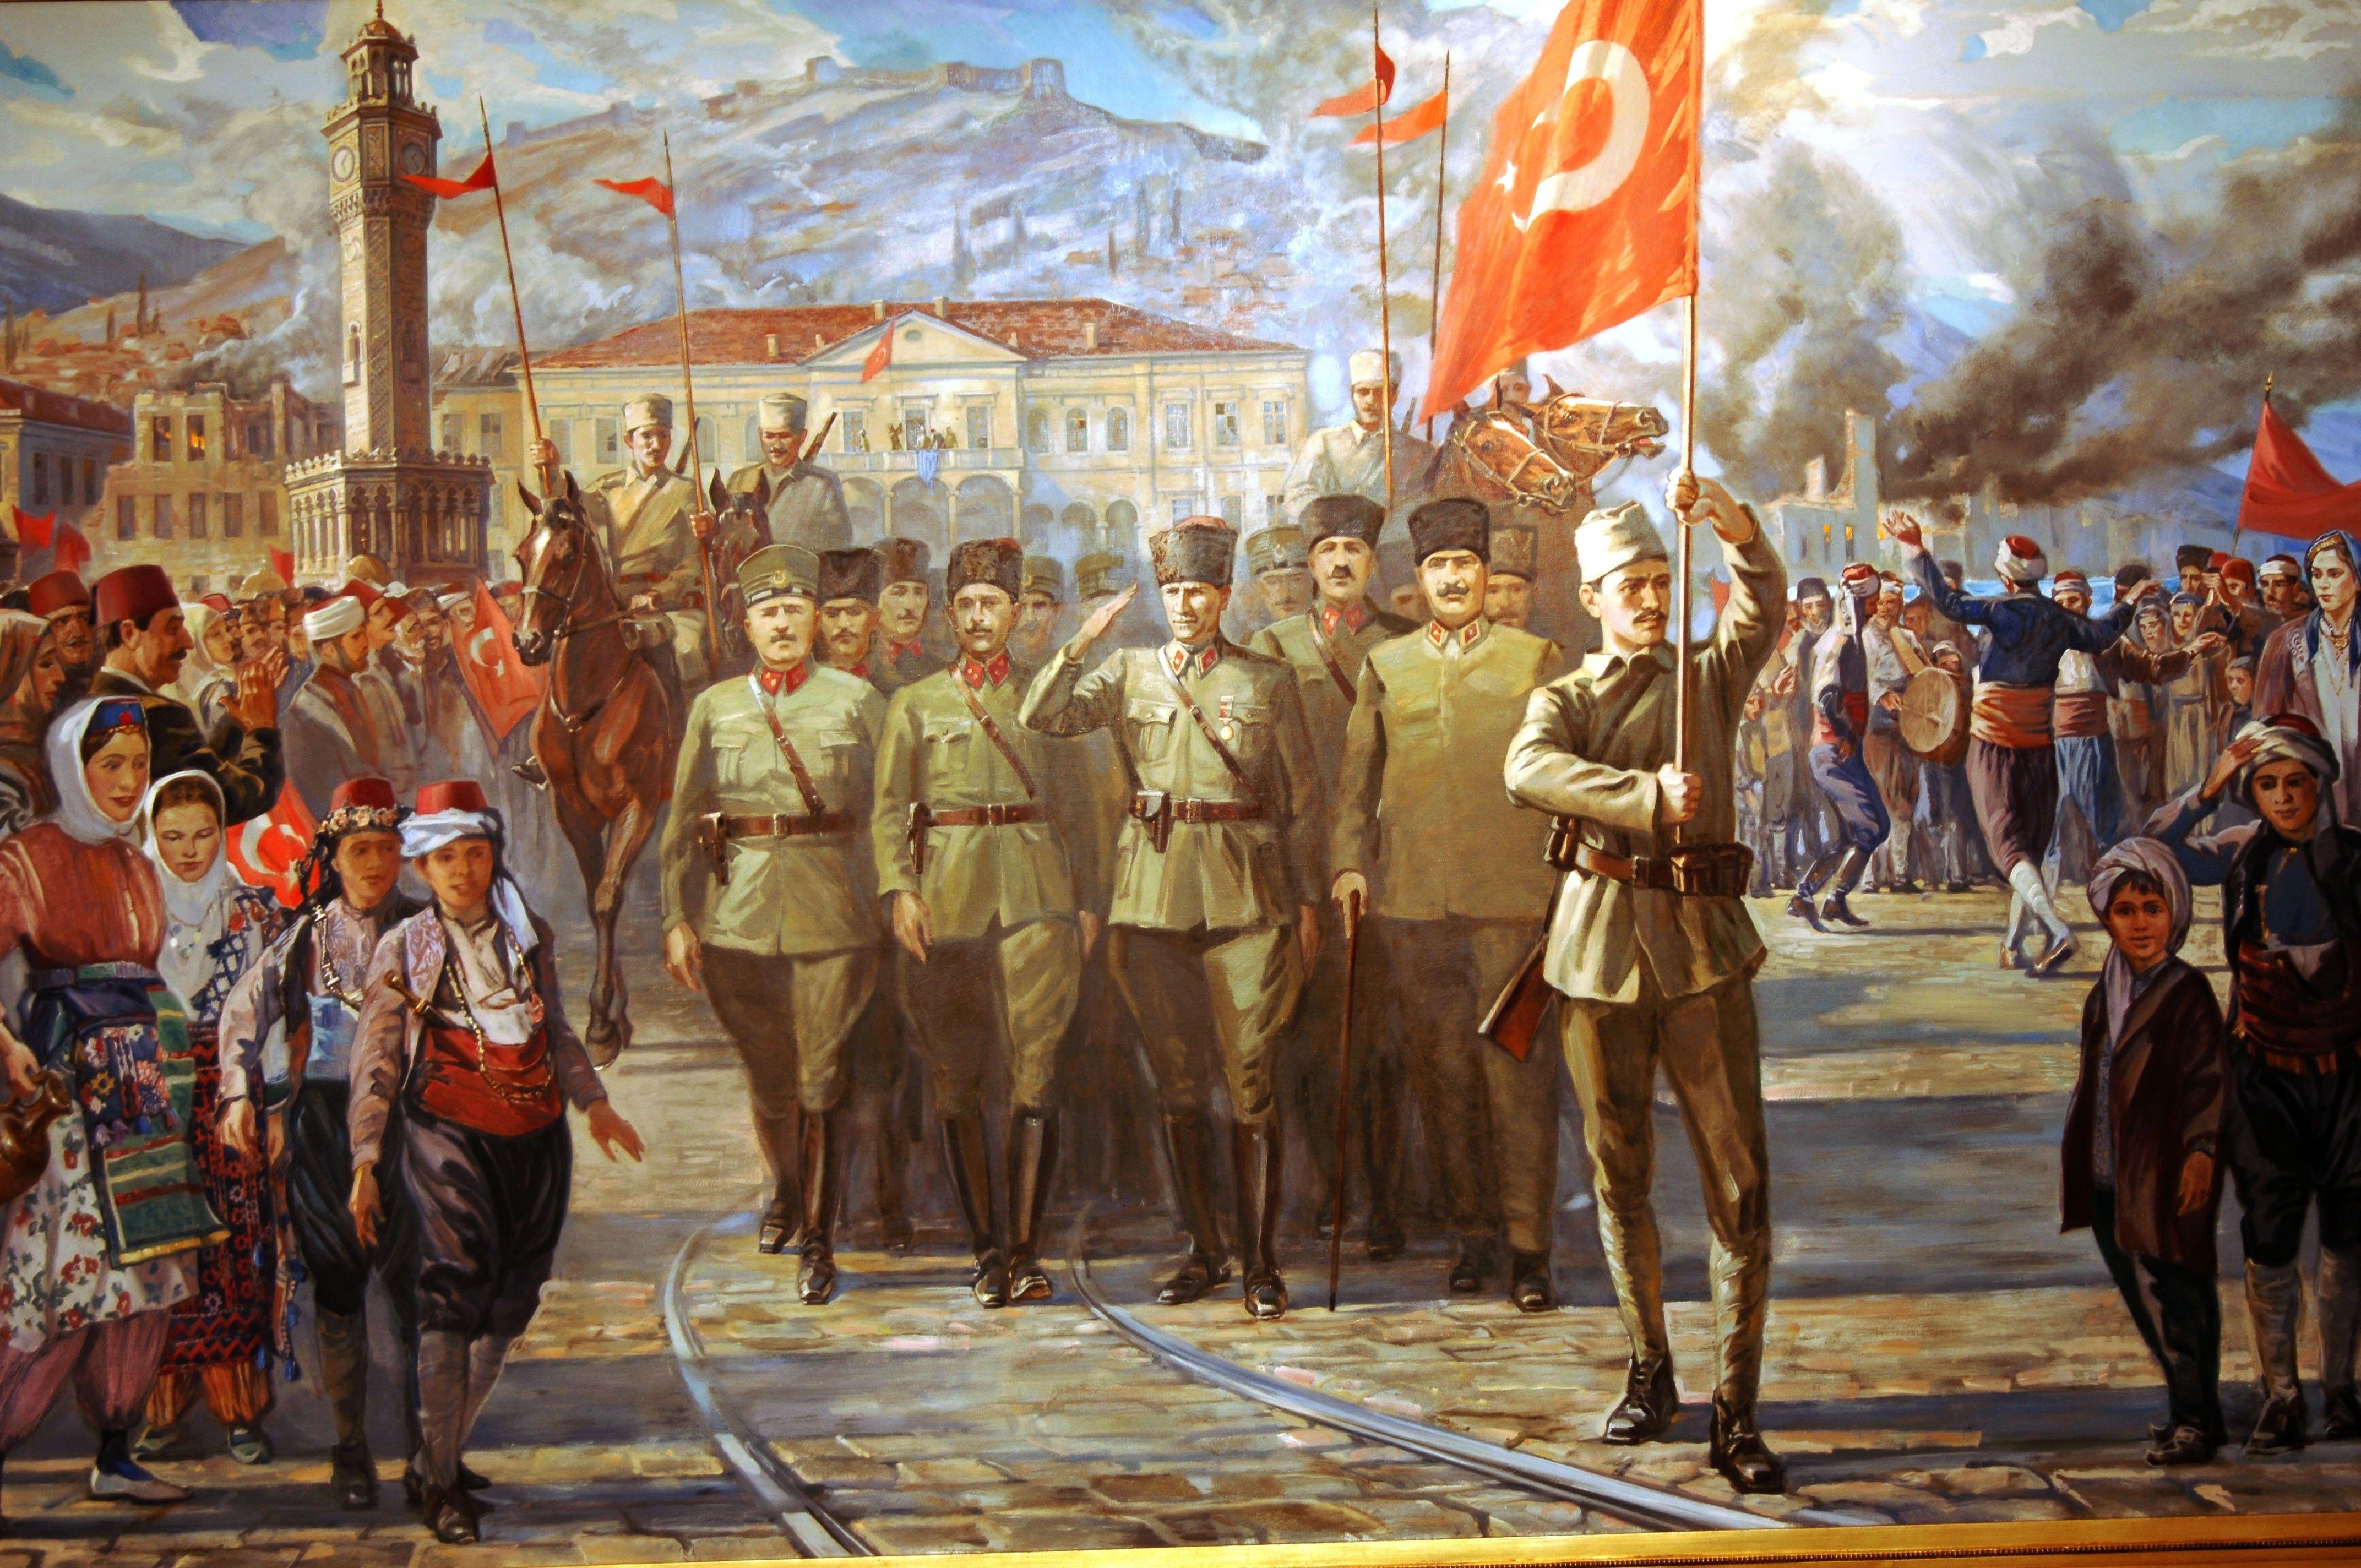 soldiers, artwork, Turkey, army, Ata, Ataturk, Turk, Turkish flag